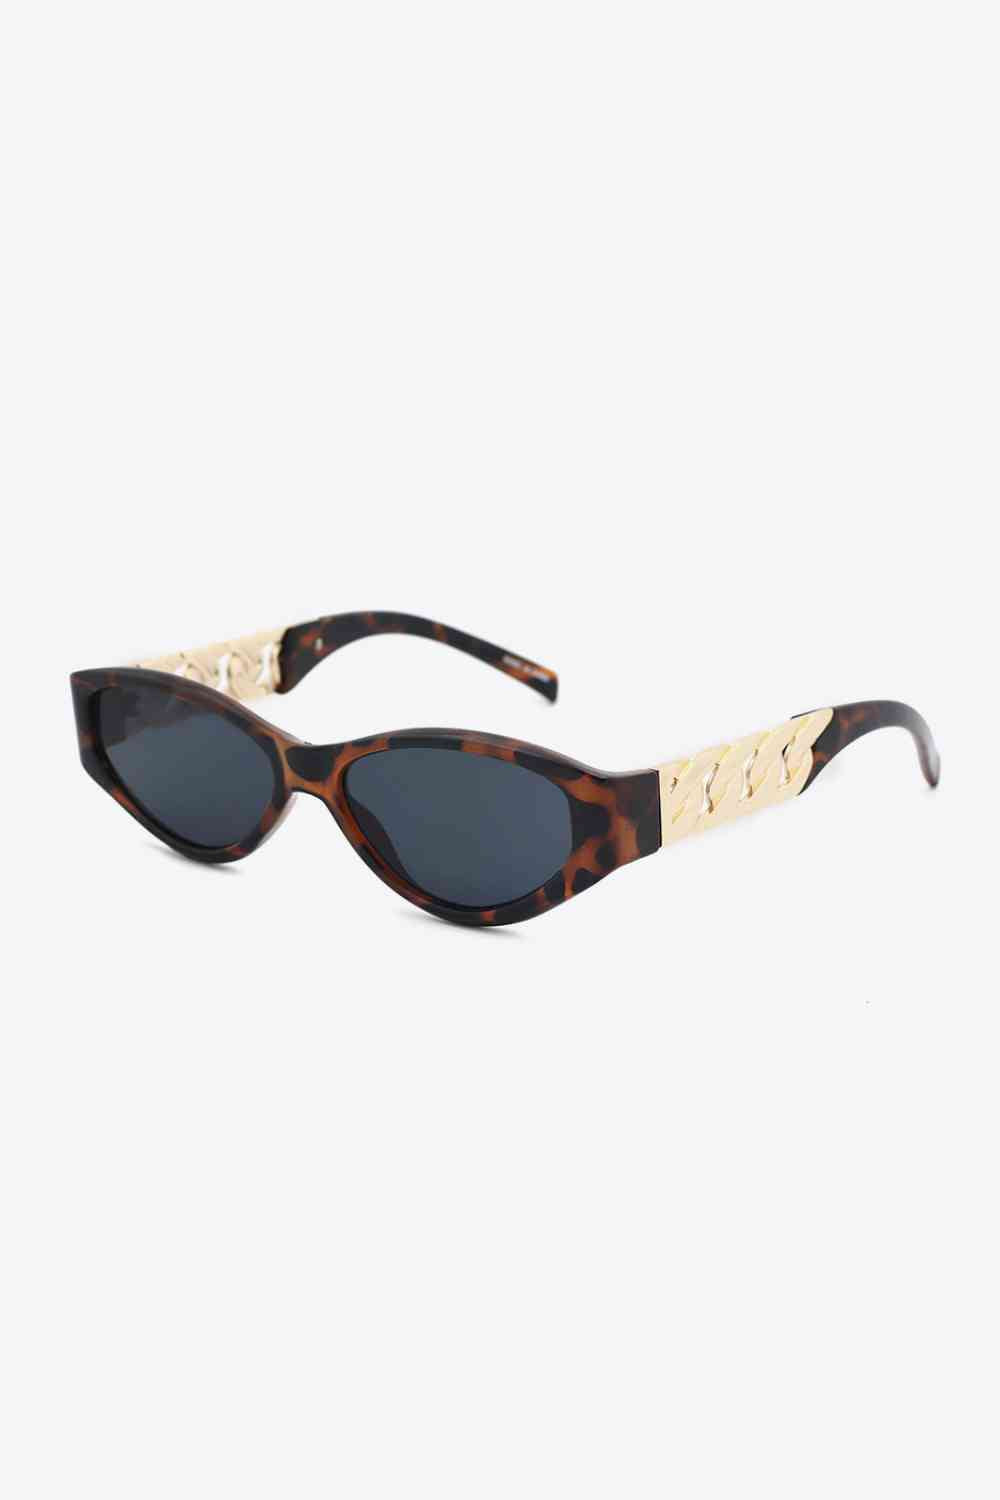 TEEK - Flat Side Chain Temple Cat Eye Sunglasses EYEGLASSES TEEK Trend Chestnut  